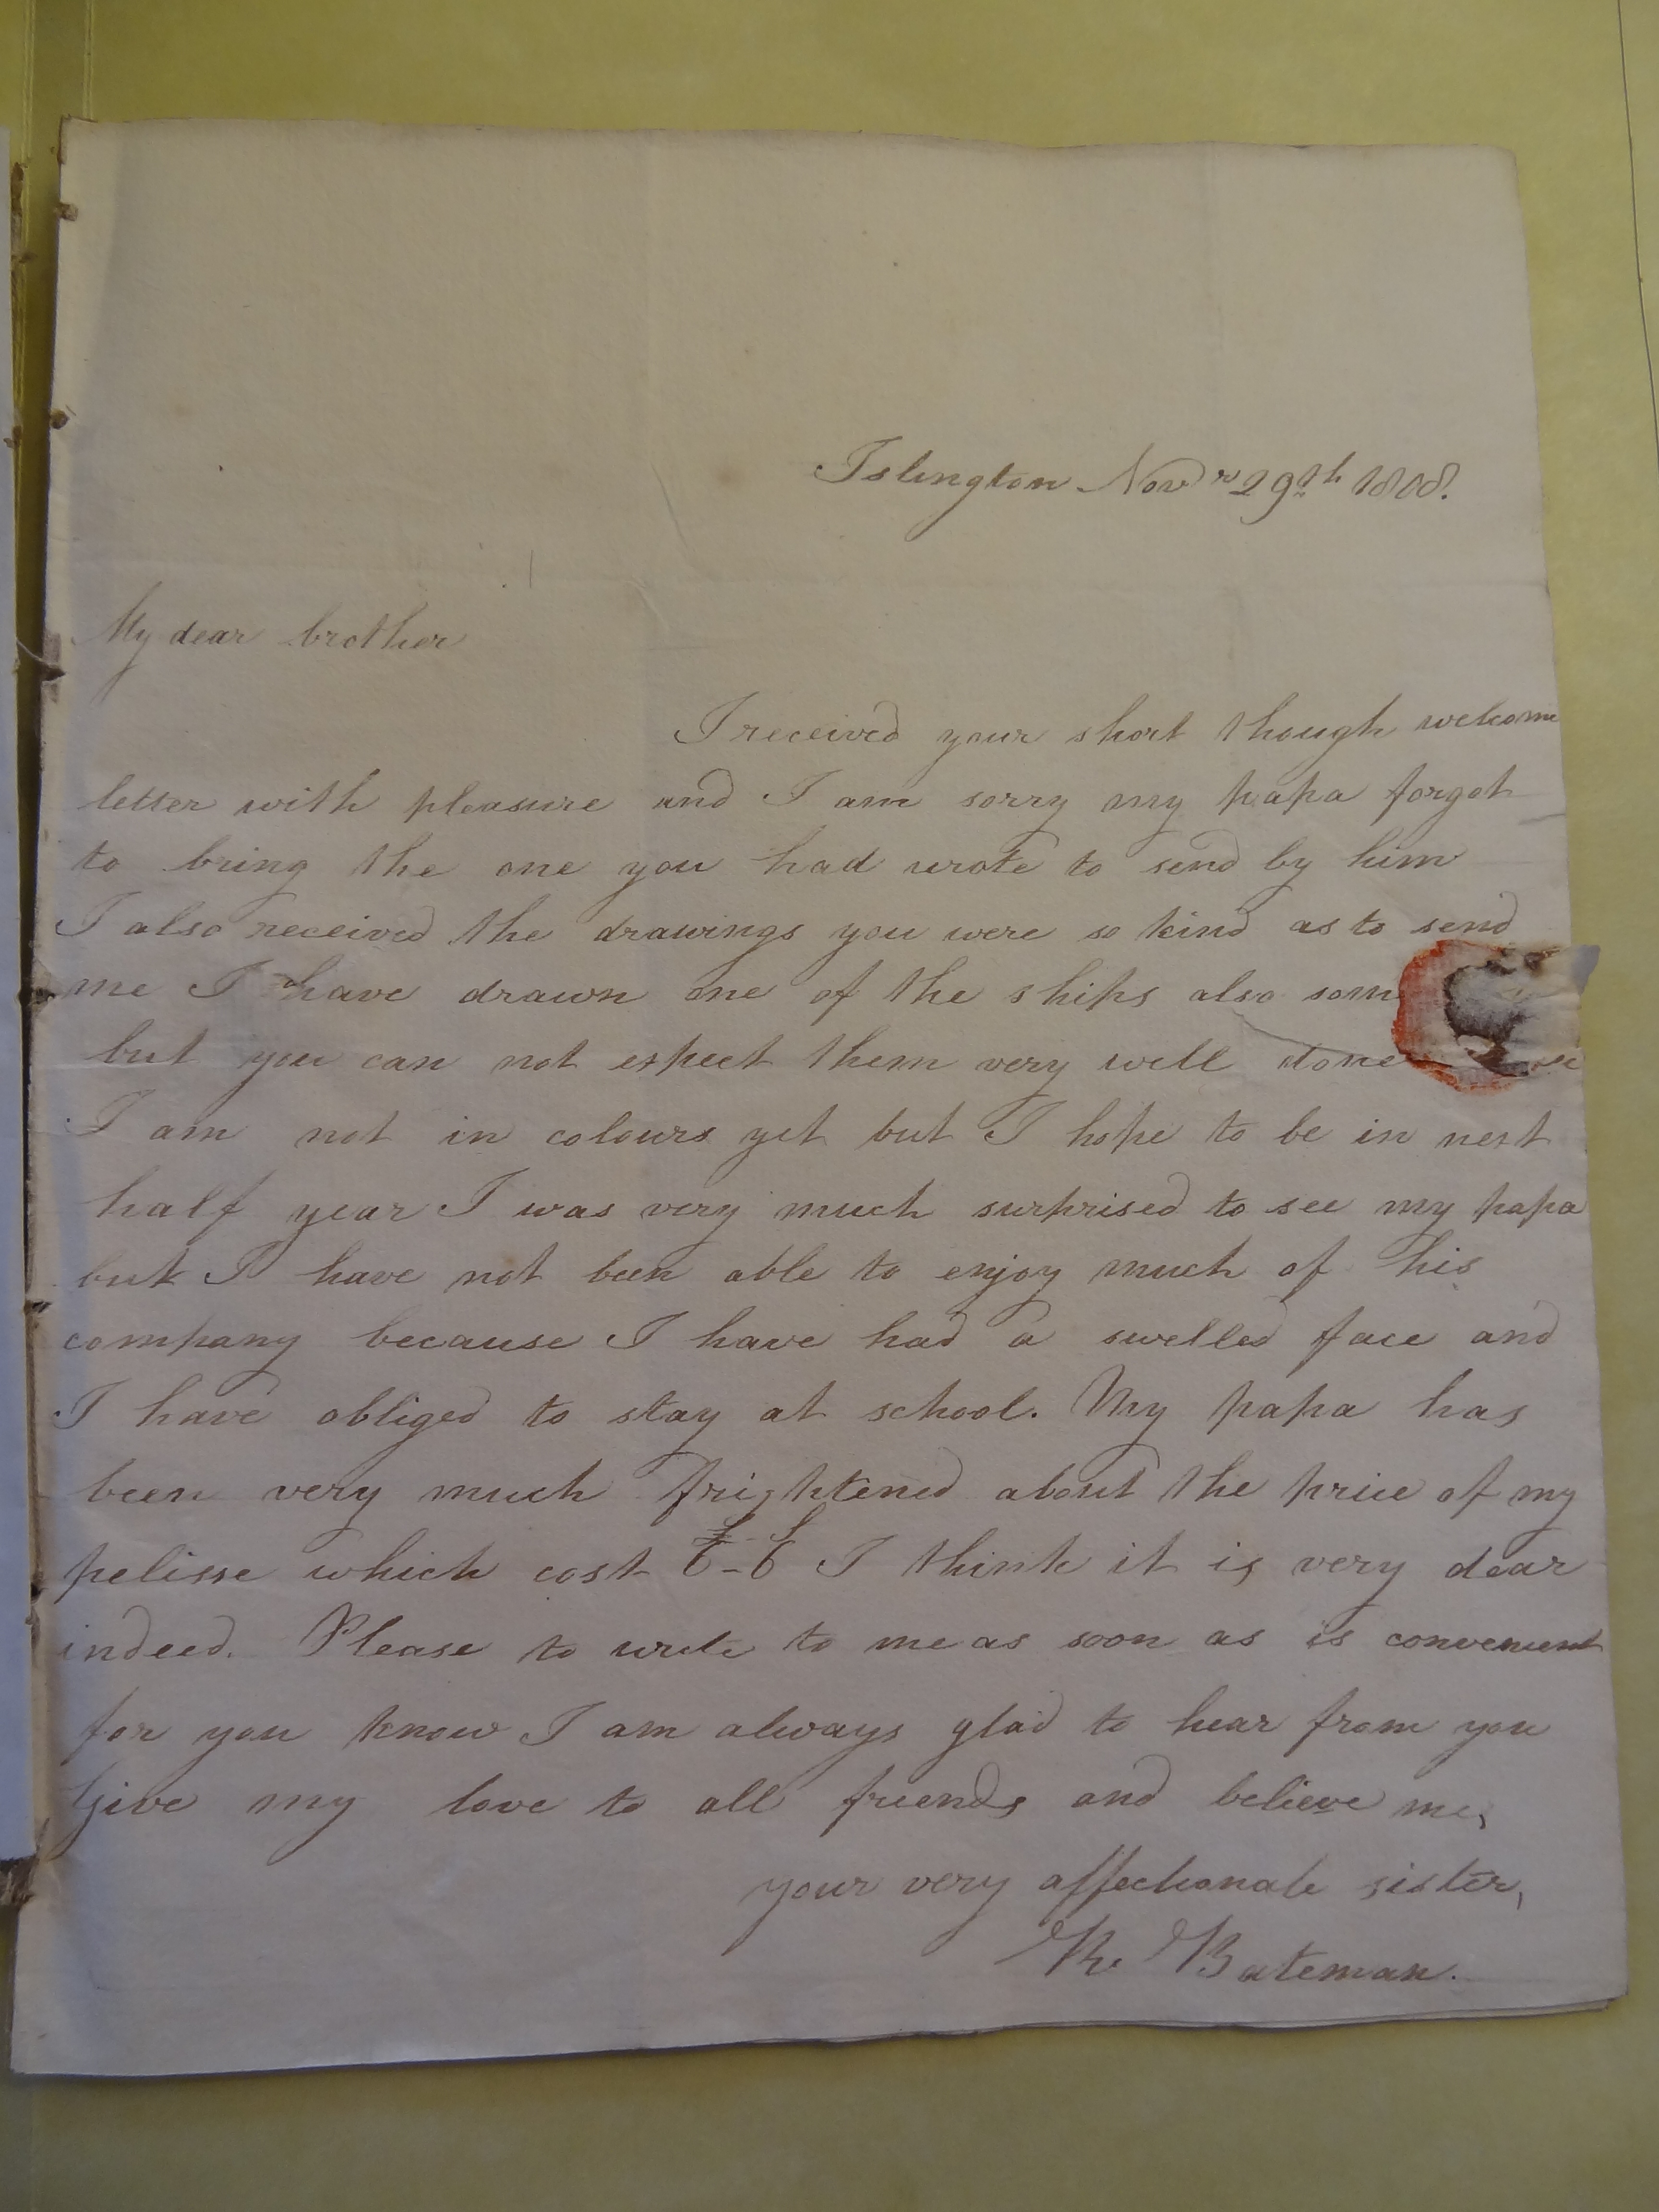 Image #1 of letter: Rebekah Hope to Thomas Bateman (junior), 29 November 1808